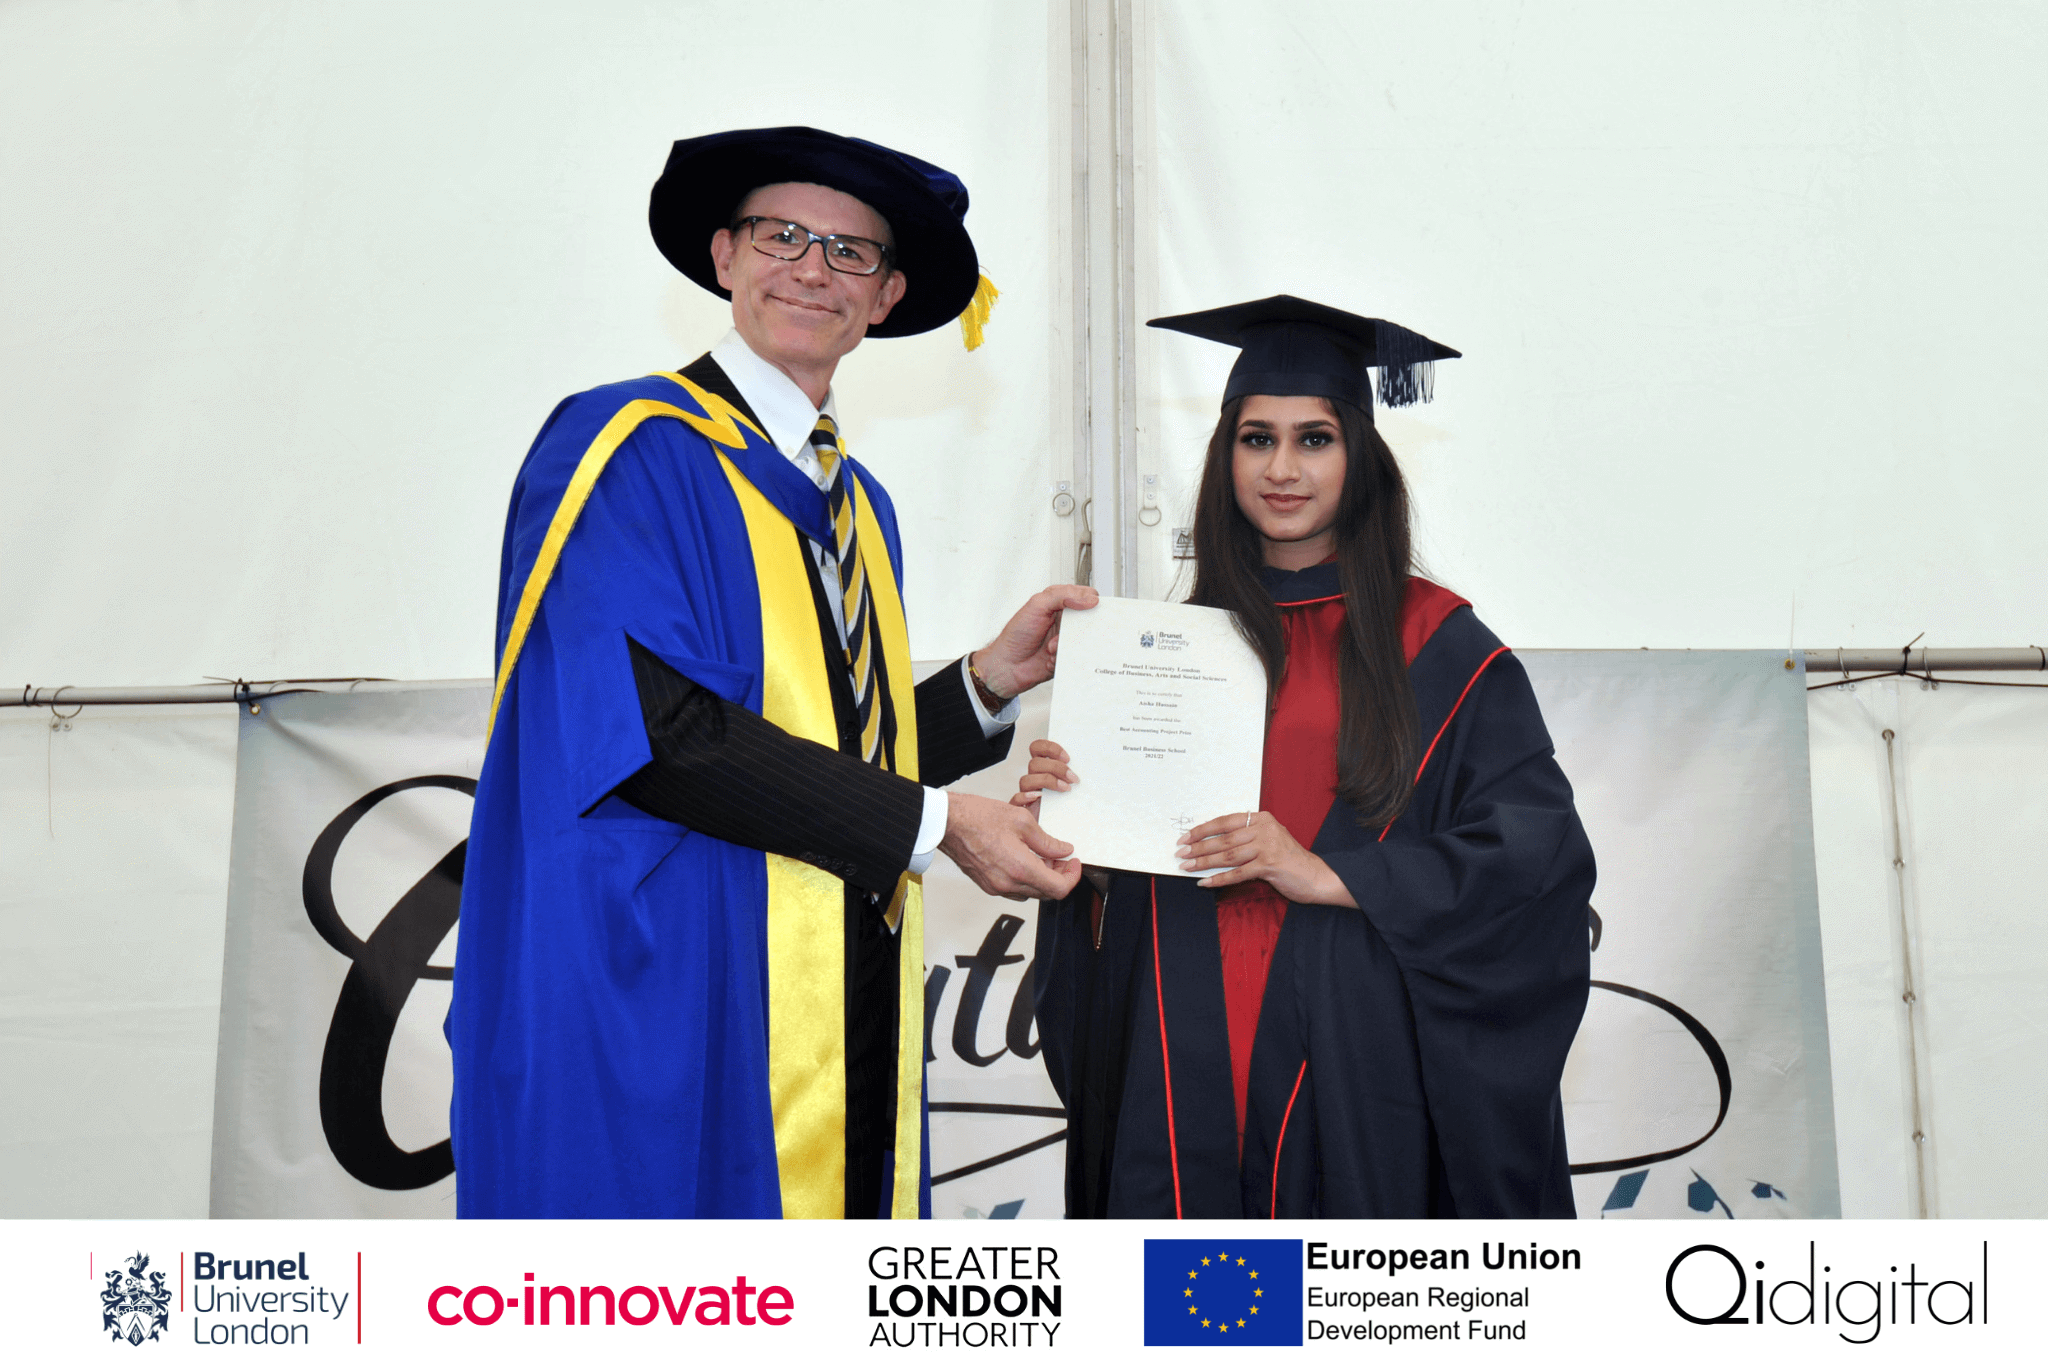 Award for Aisha's Final Year Project involving Qi Digital